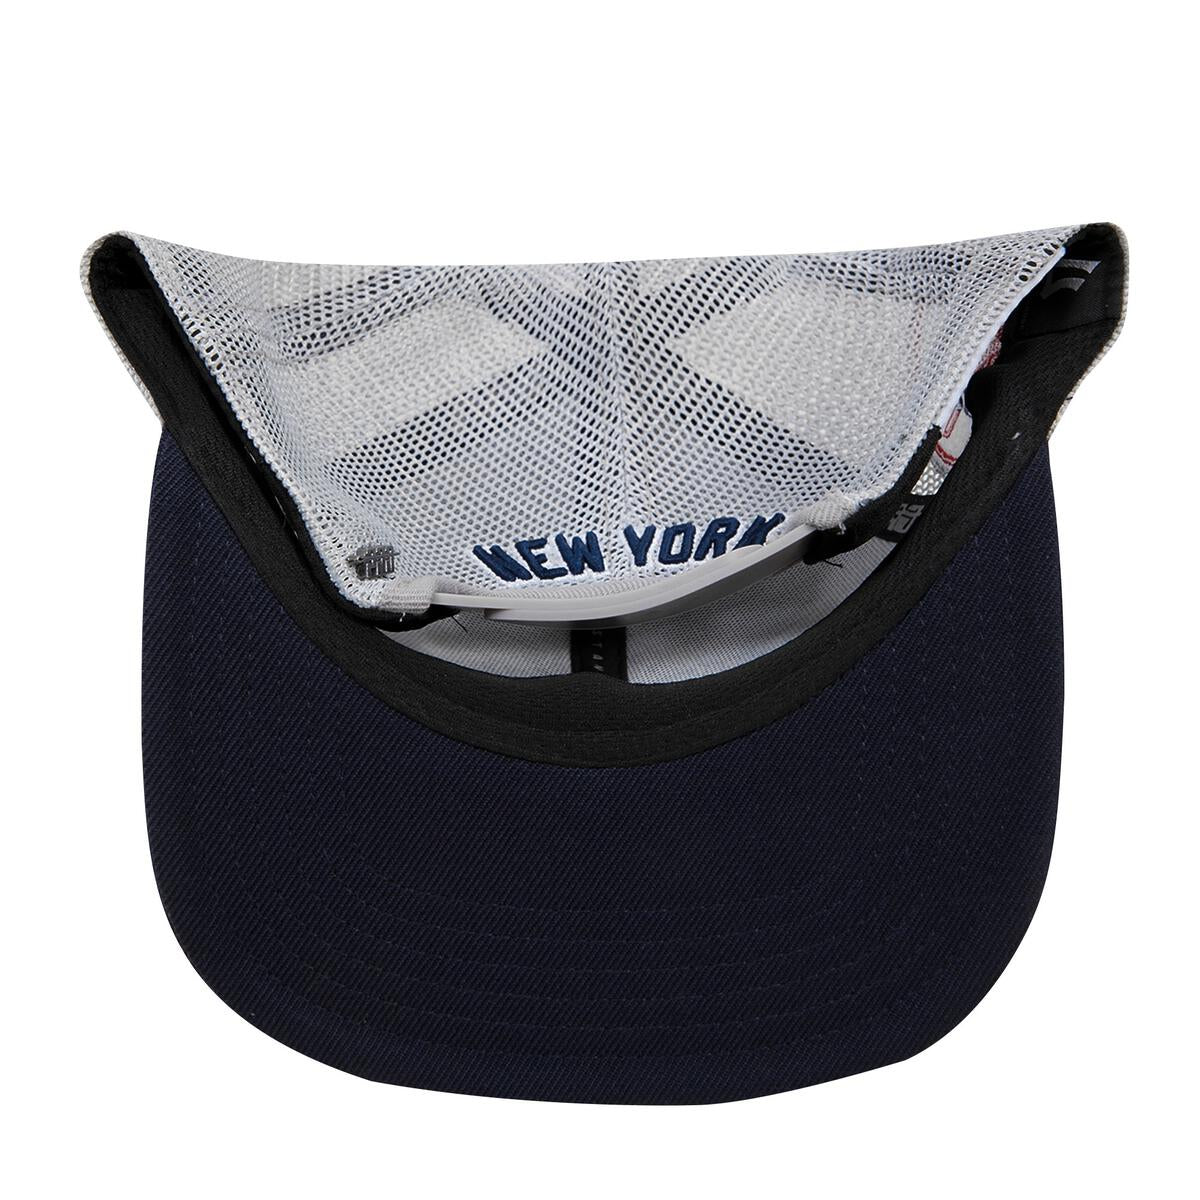 PRO STANDARD -NEW YORK YANKEES CLASSIC MESH BACK TRUCKER HAT